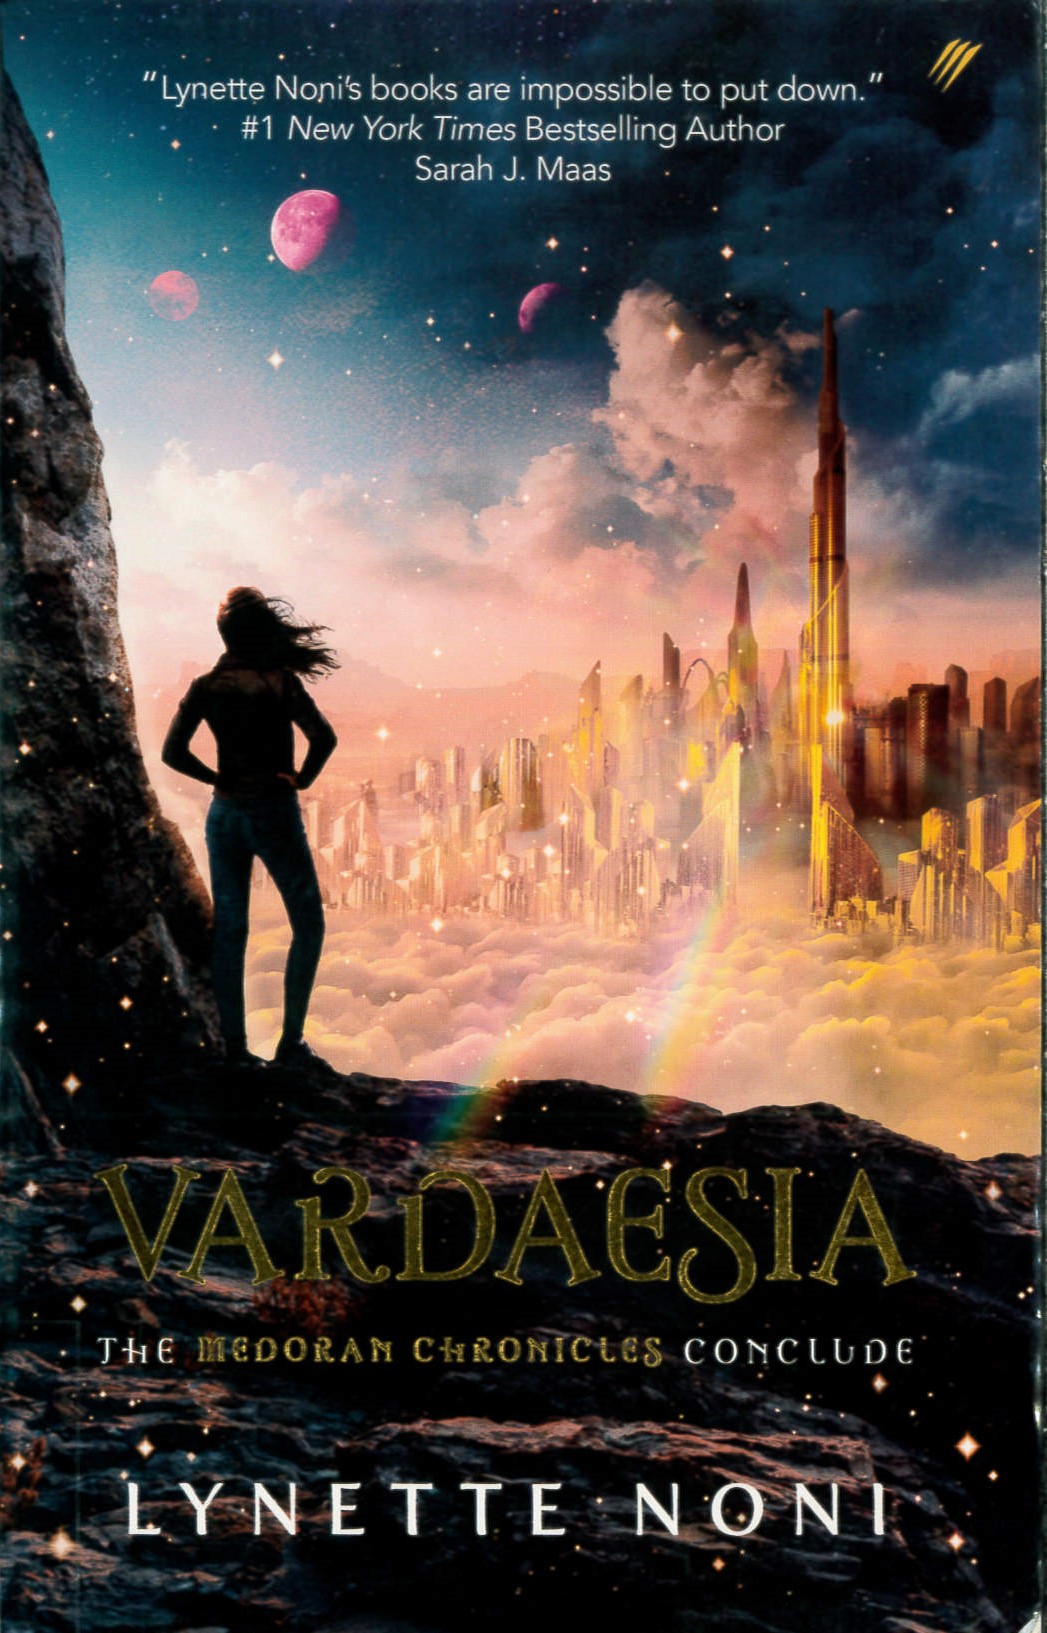 Vardaesia /